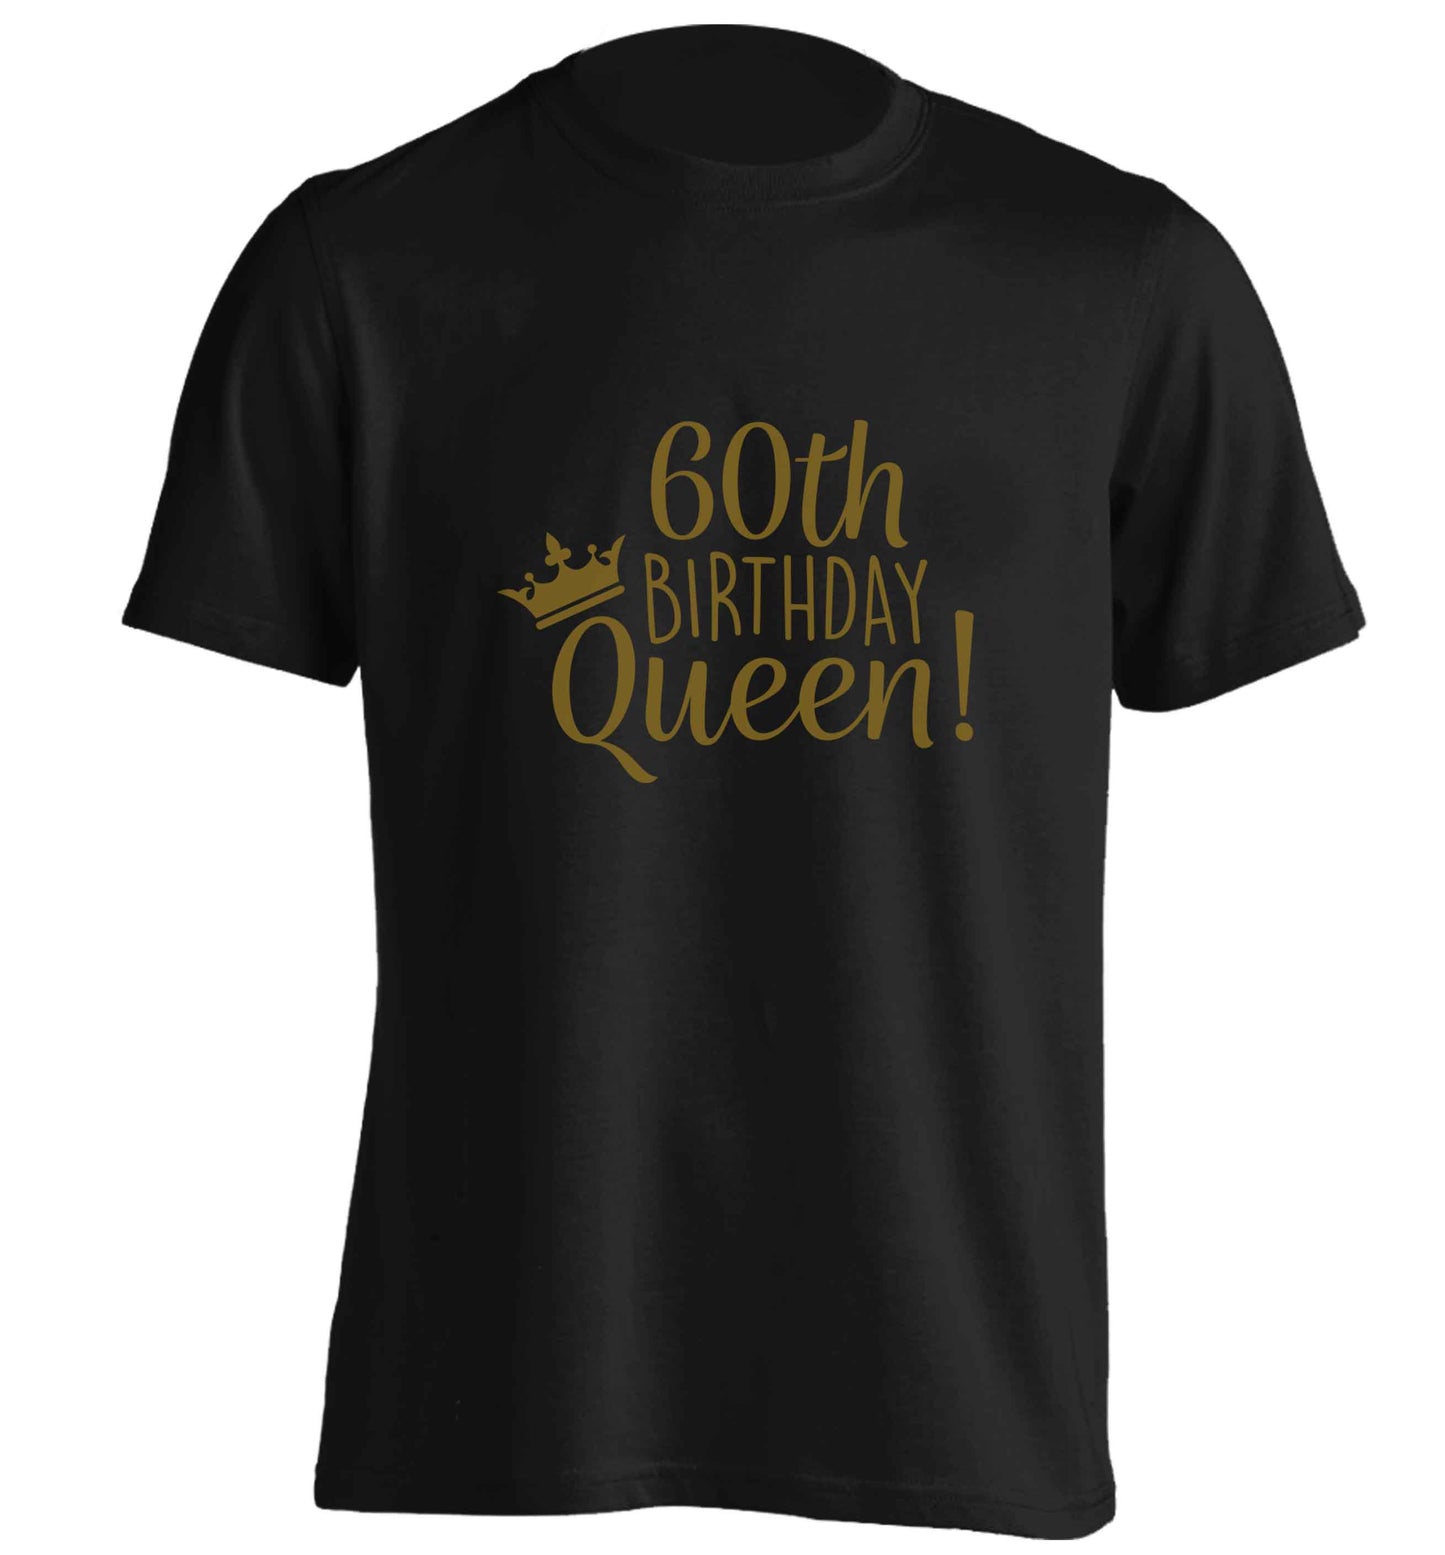 60th birthday Queen adults unisex black Tshirt 2XL